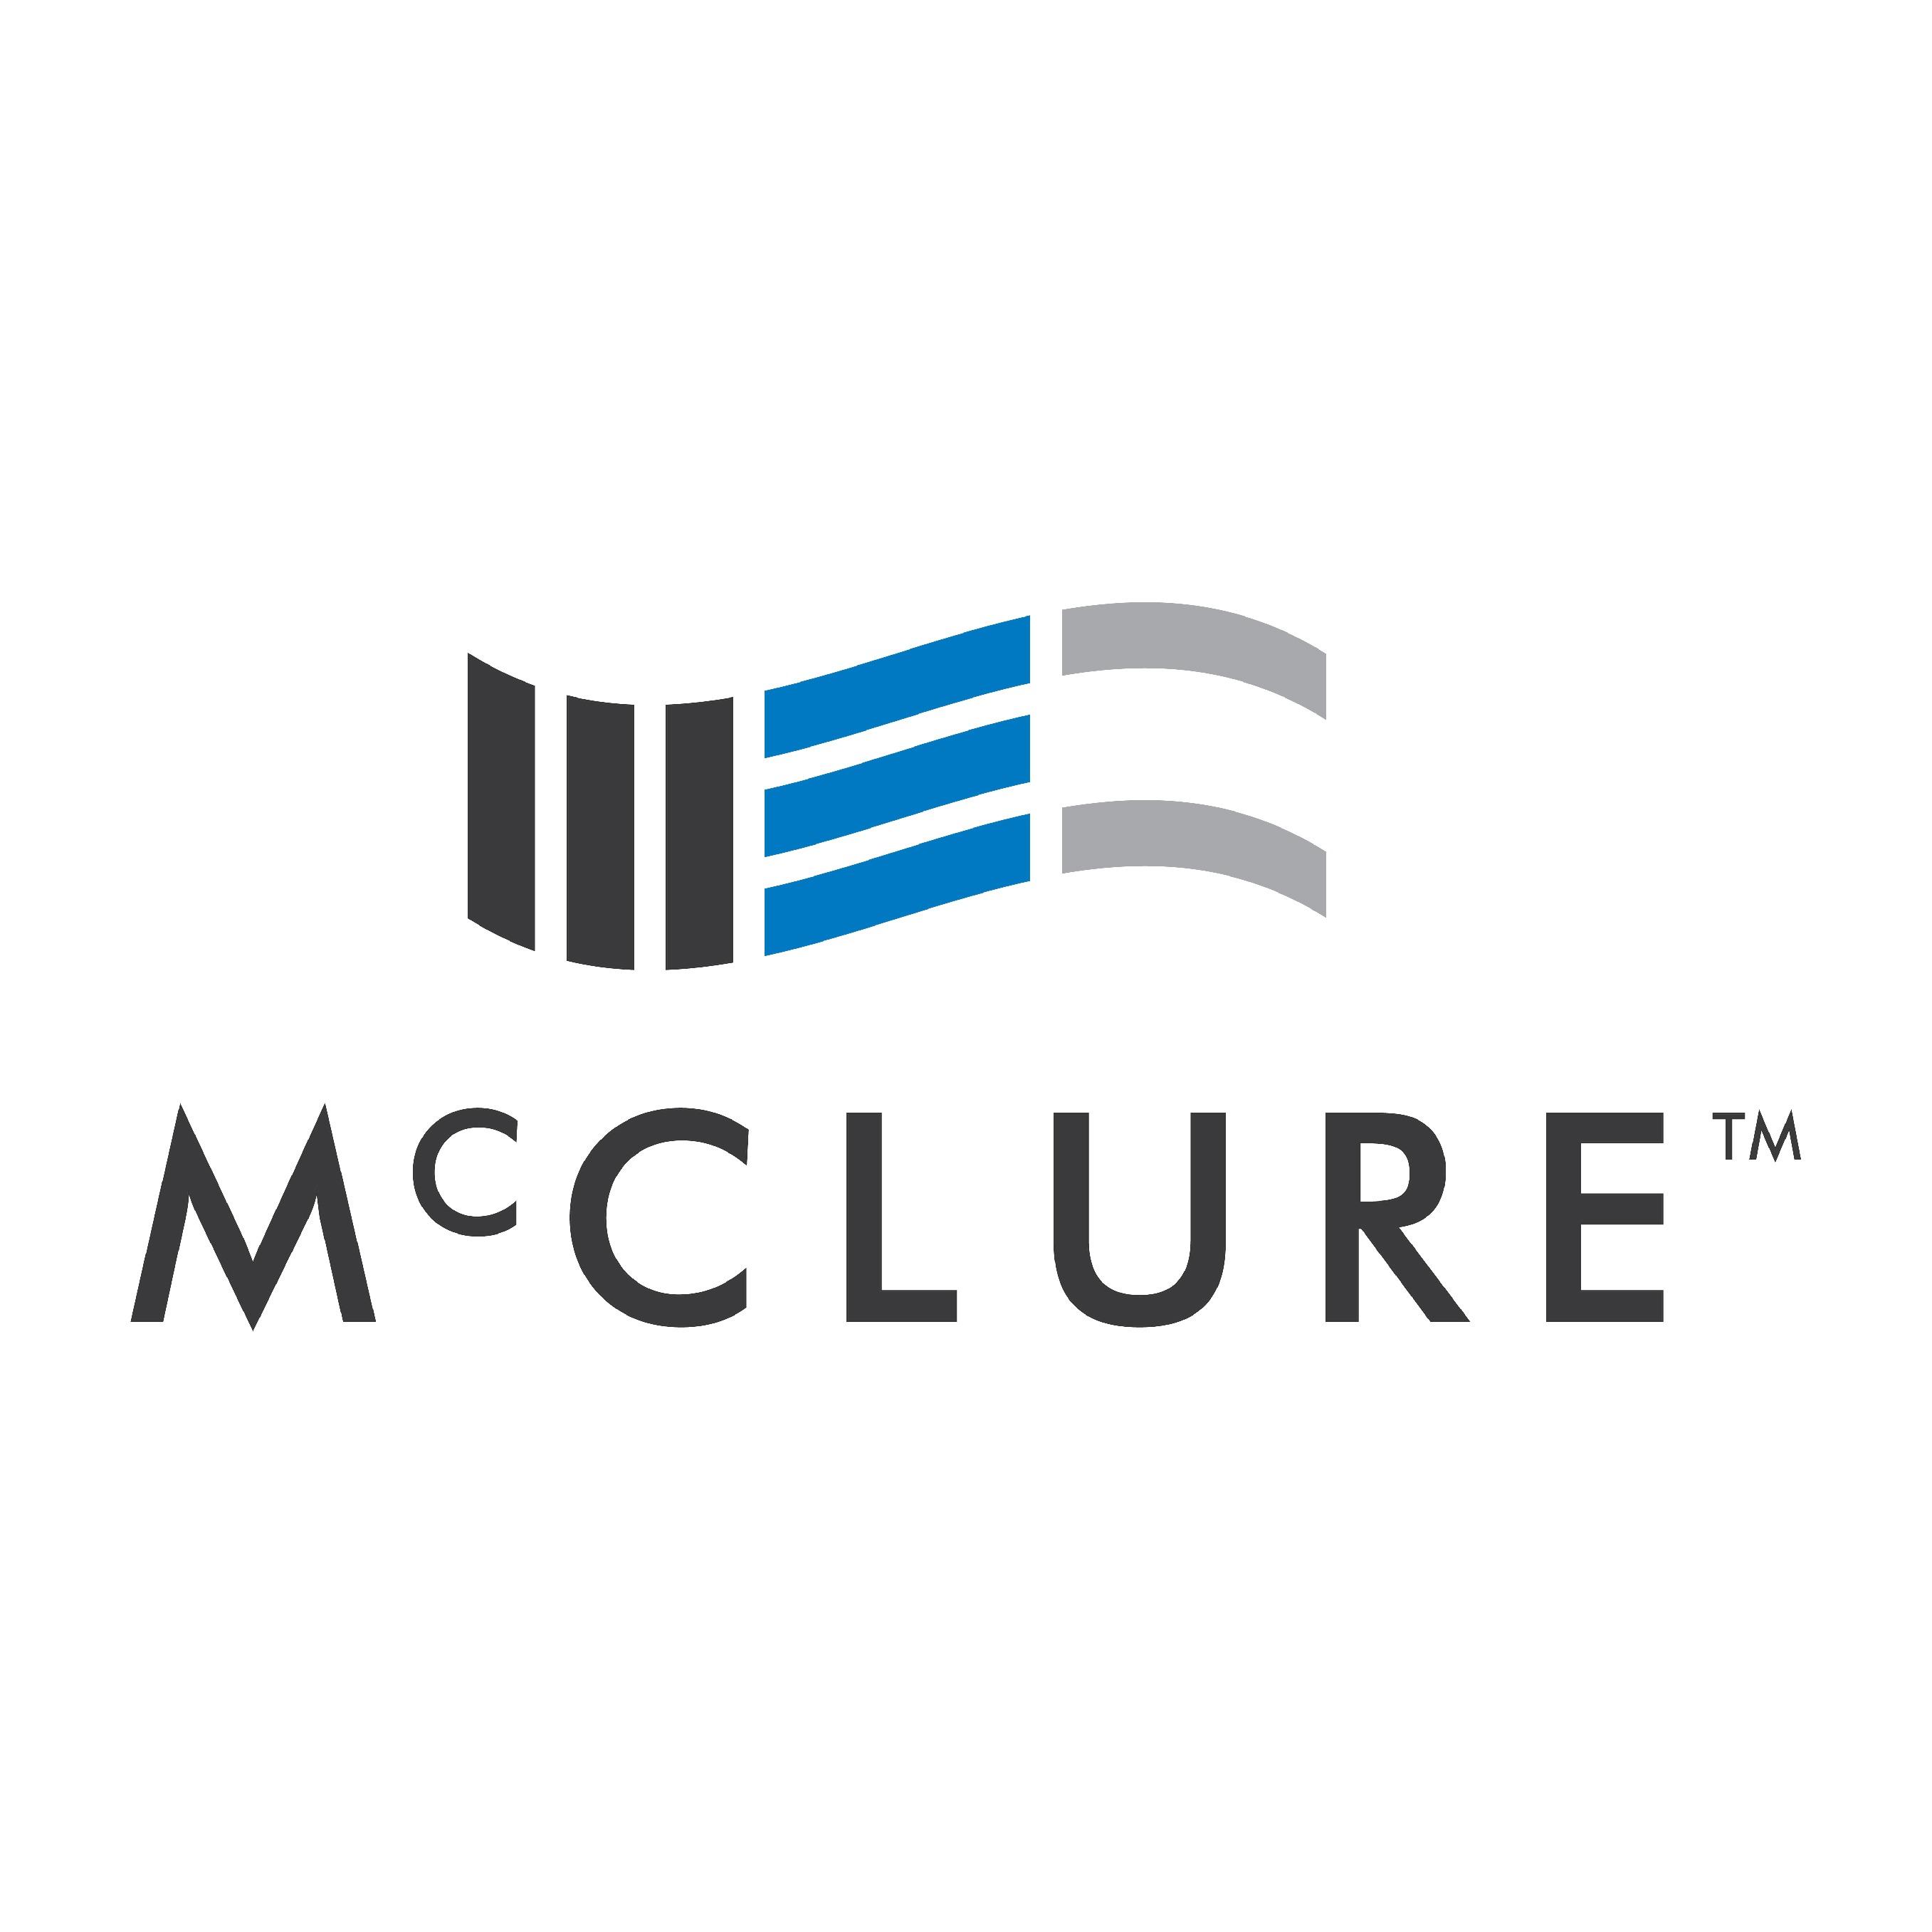 McClure - Council Bluffs, IA 51501-3211 - (712)454-7691 | ShowMeLocal.com